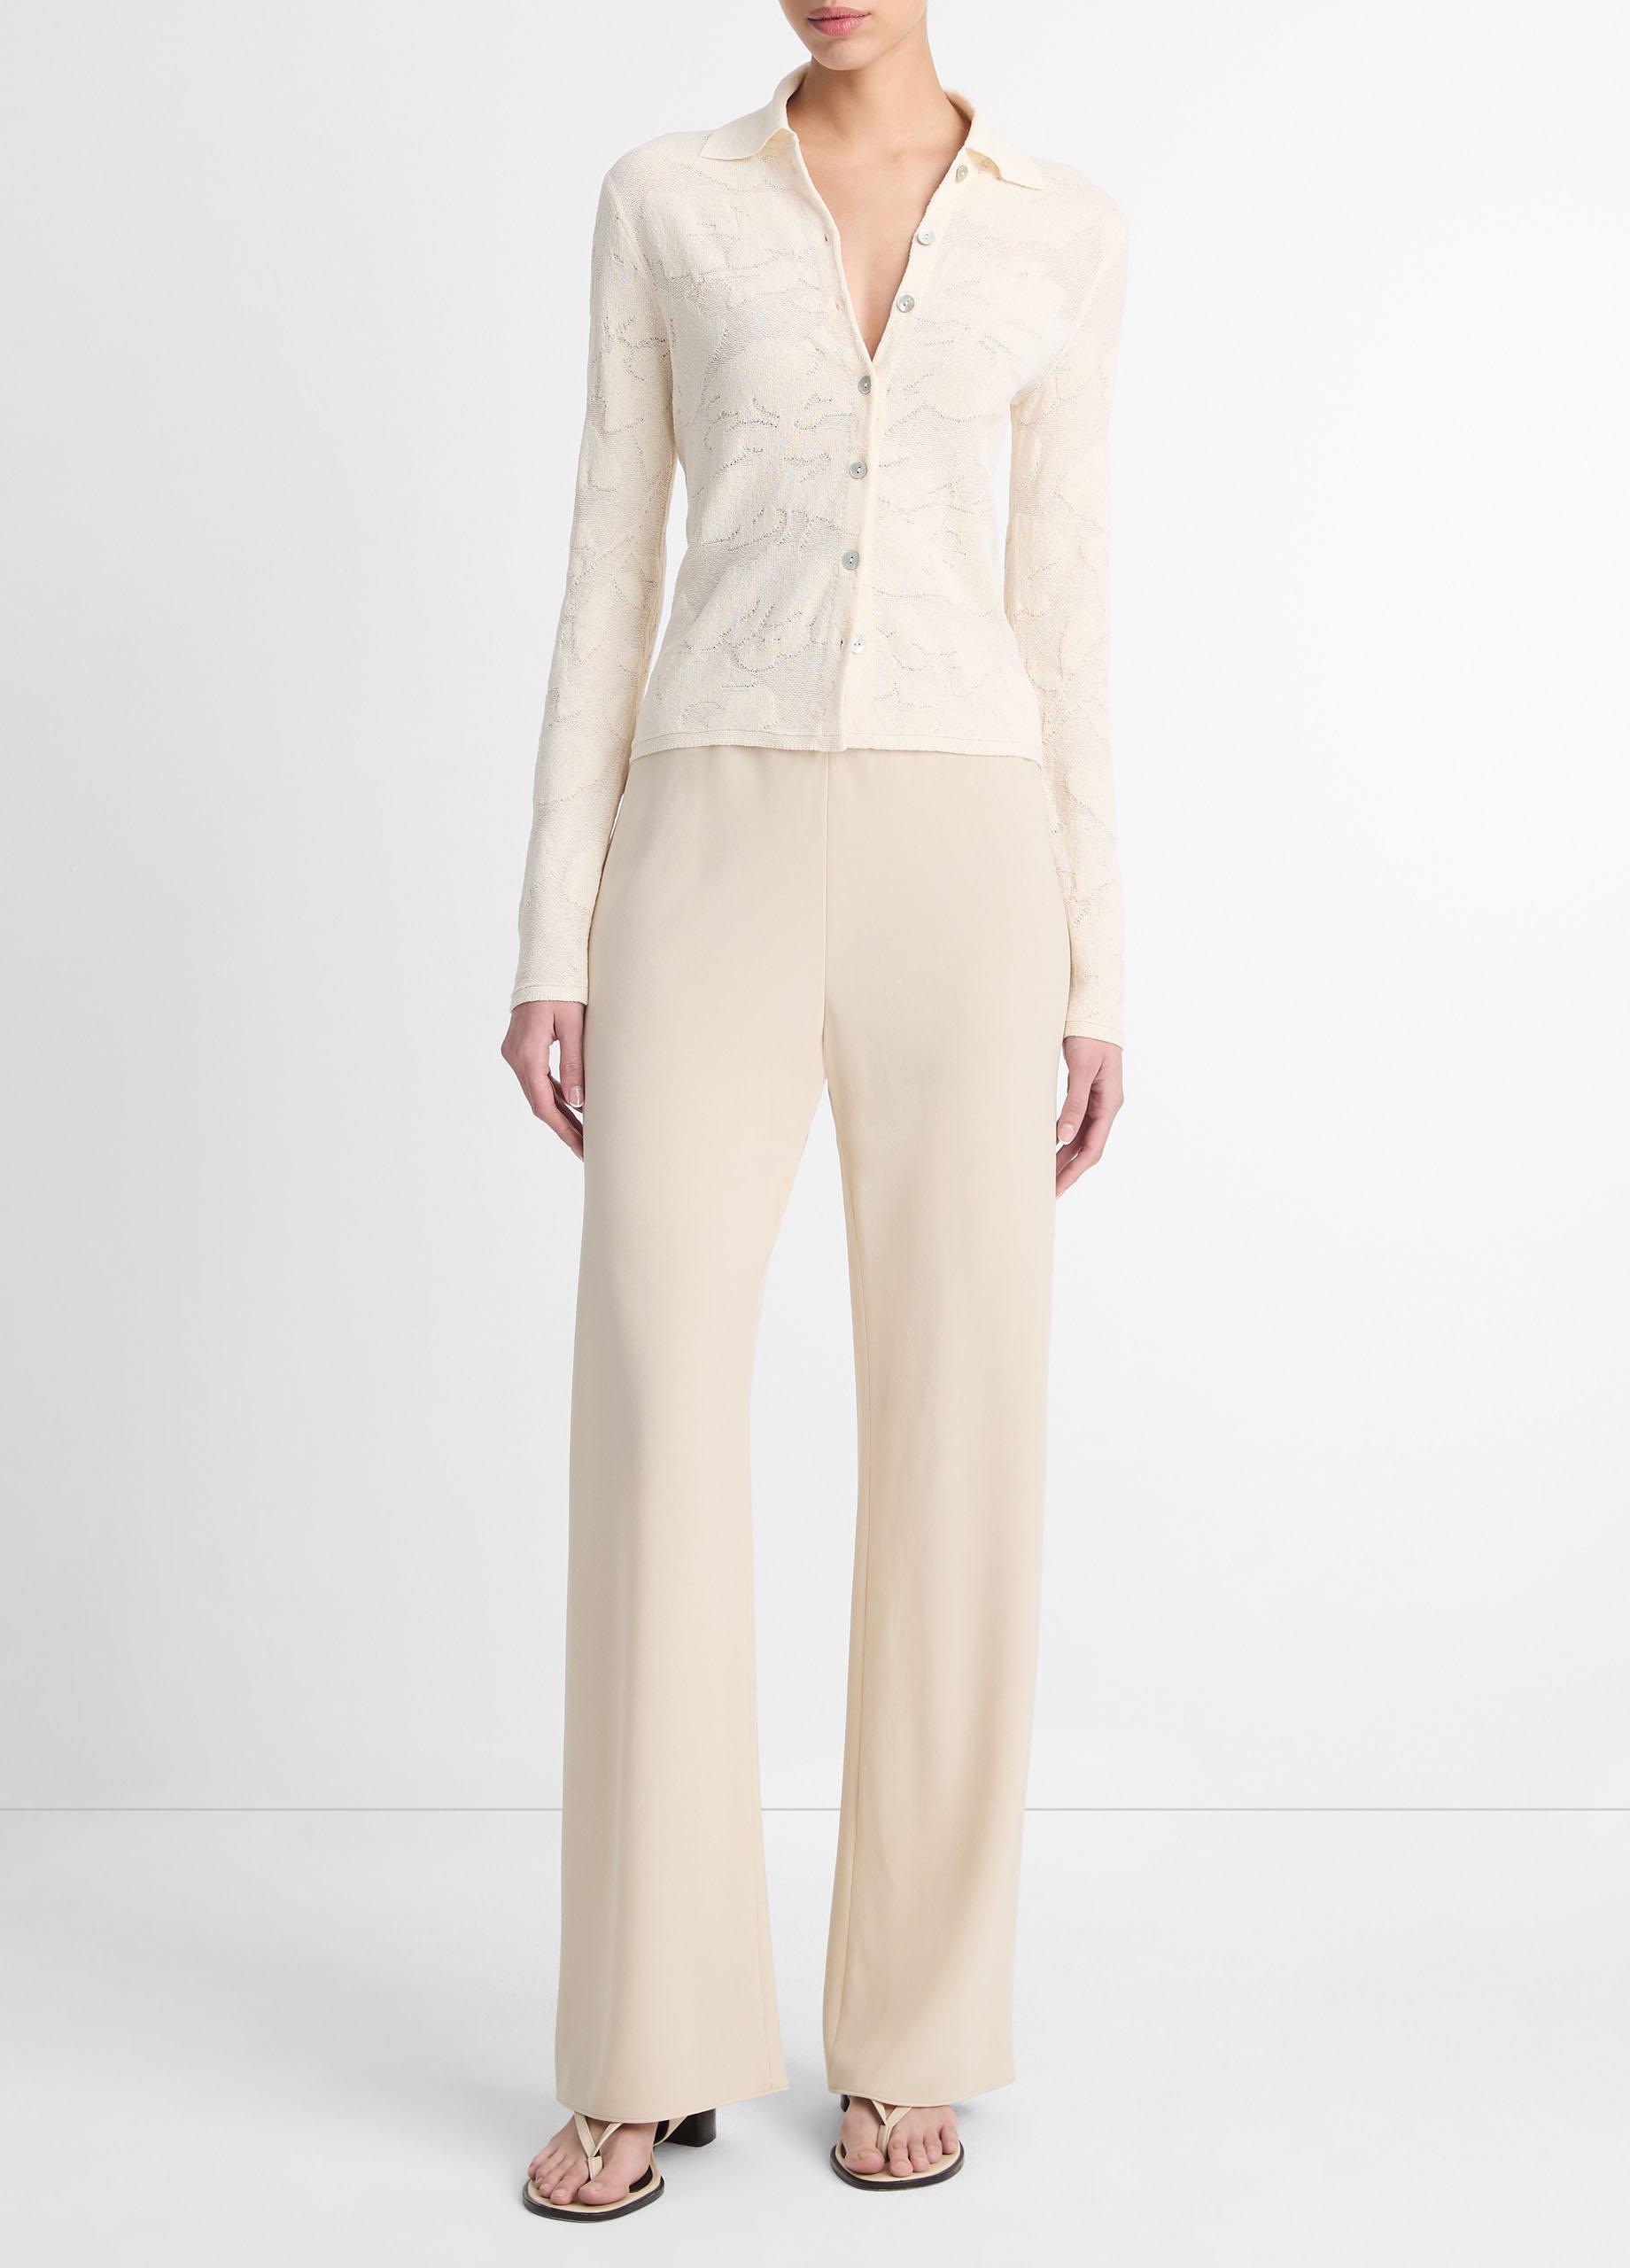 Italian Cotton-Blend Textured Floral Button-Up Shirt, Ivory, Size XL Vince